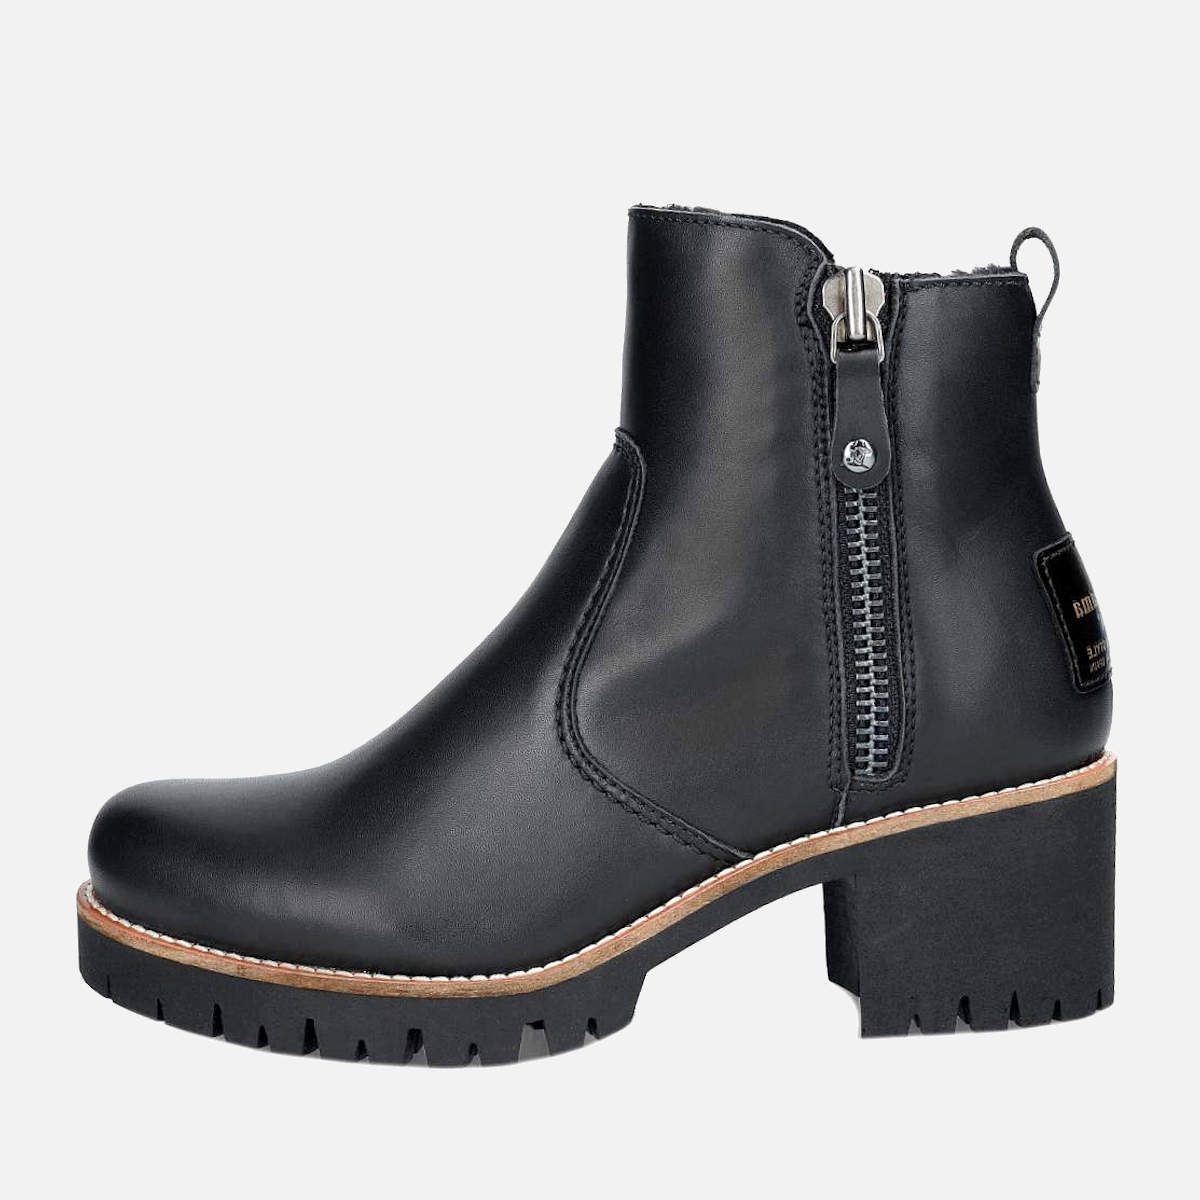 echo dilemma Toegepast Panama Jack Premium Black Leather Warm Twin Zip Boots